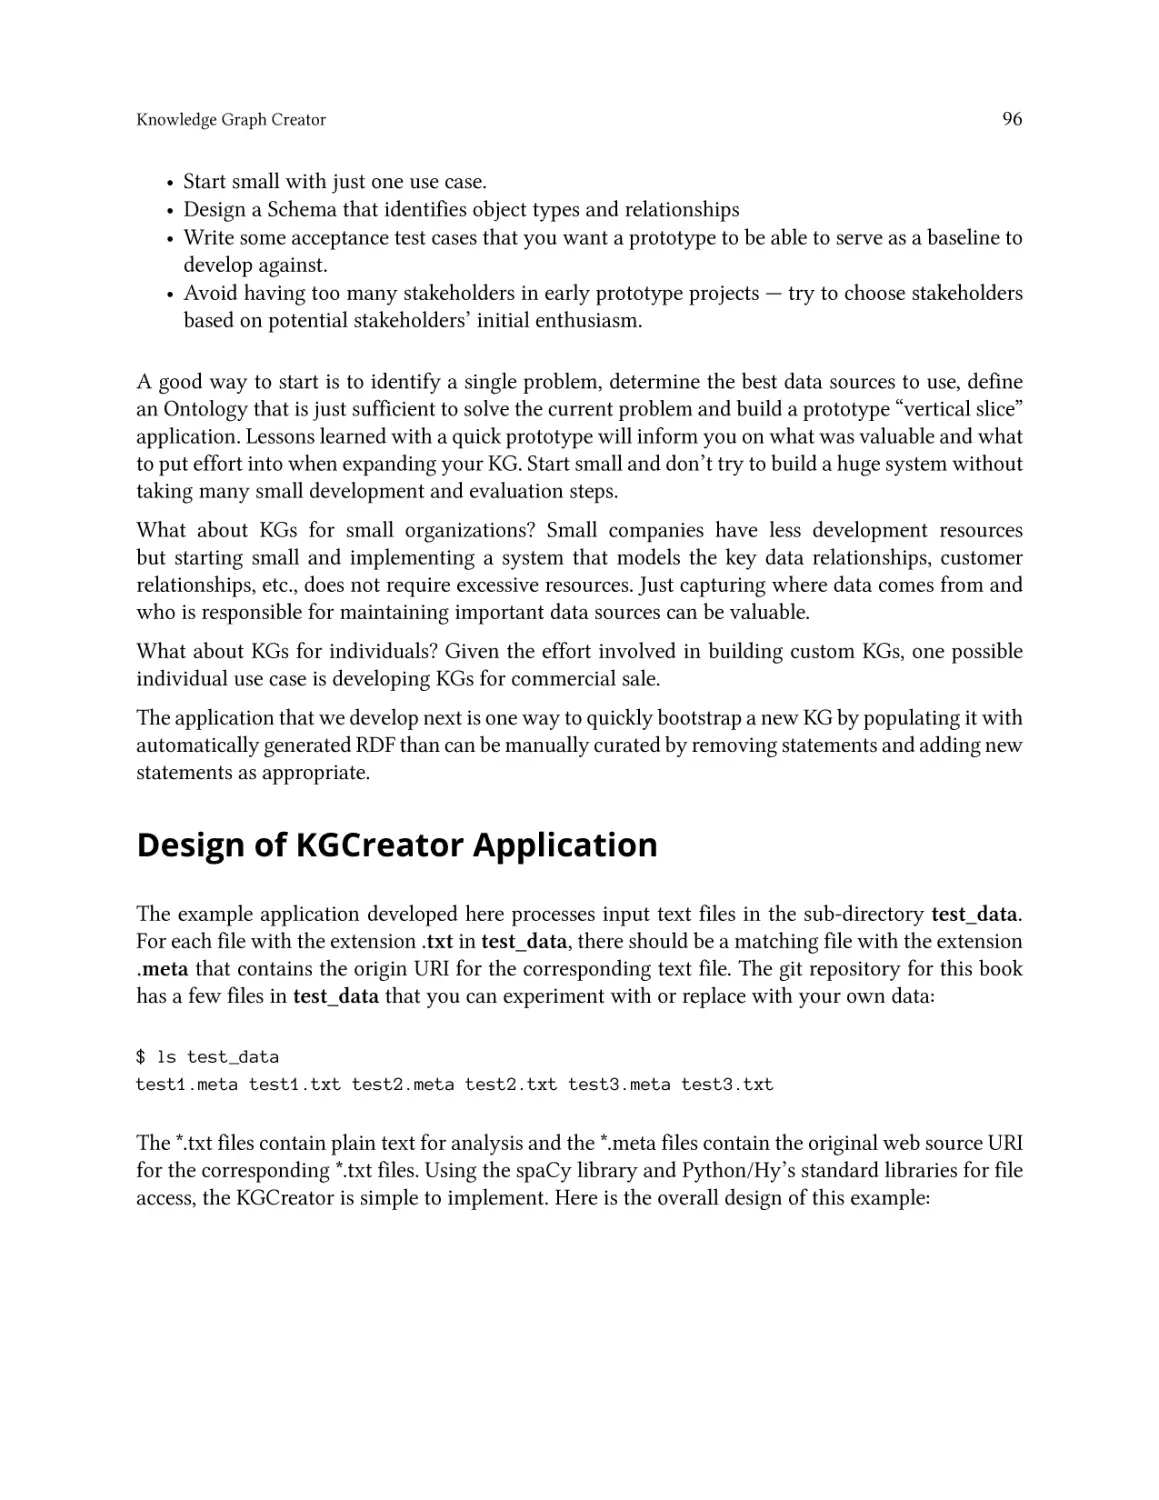 Design of KGCreator Application